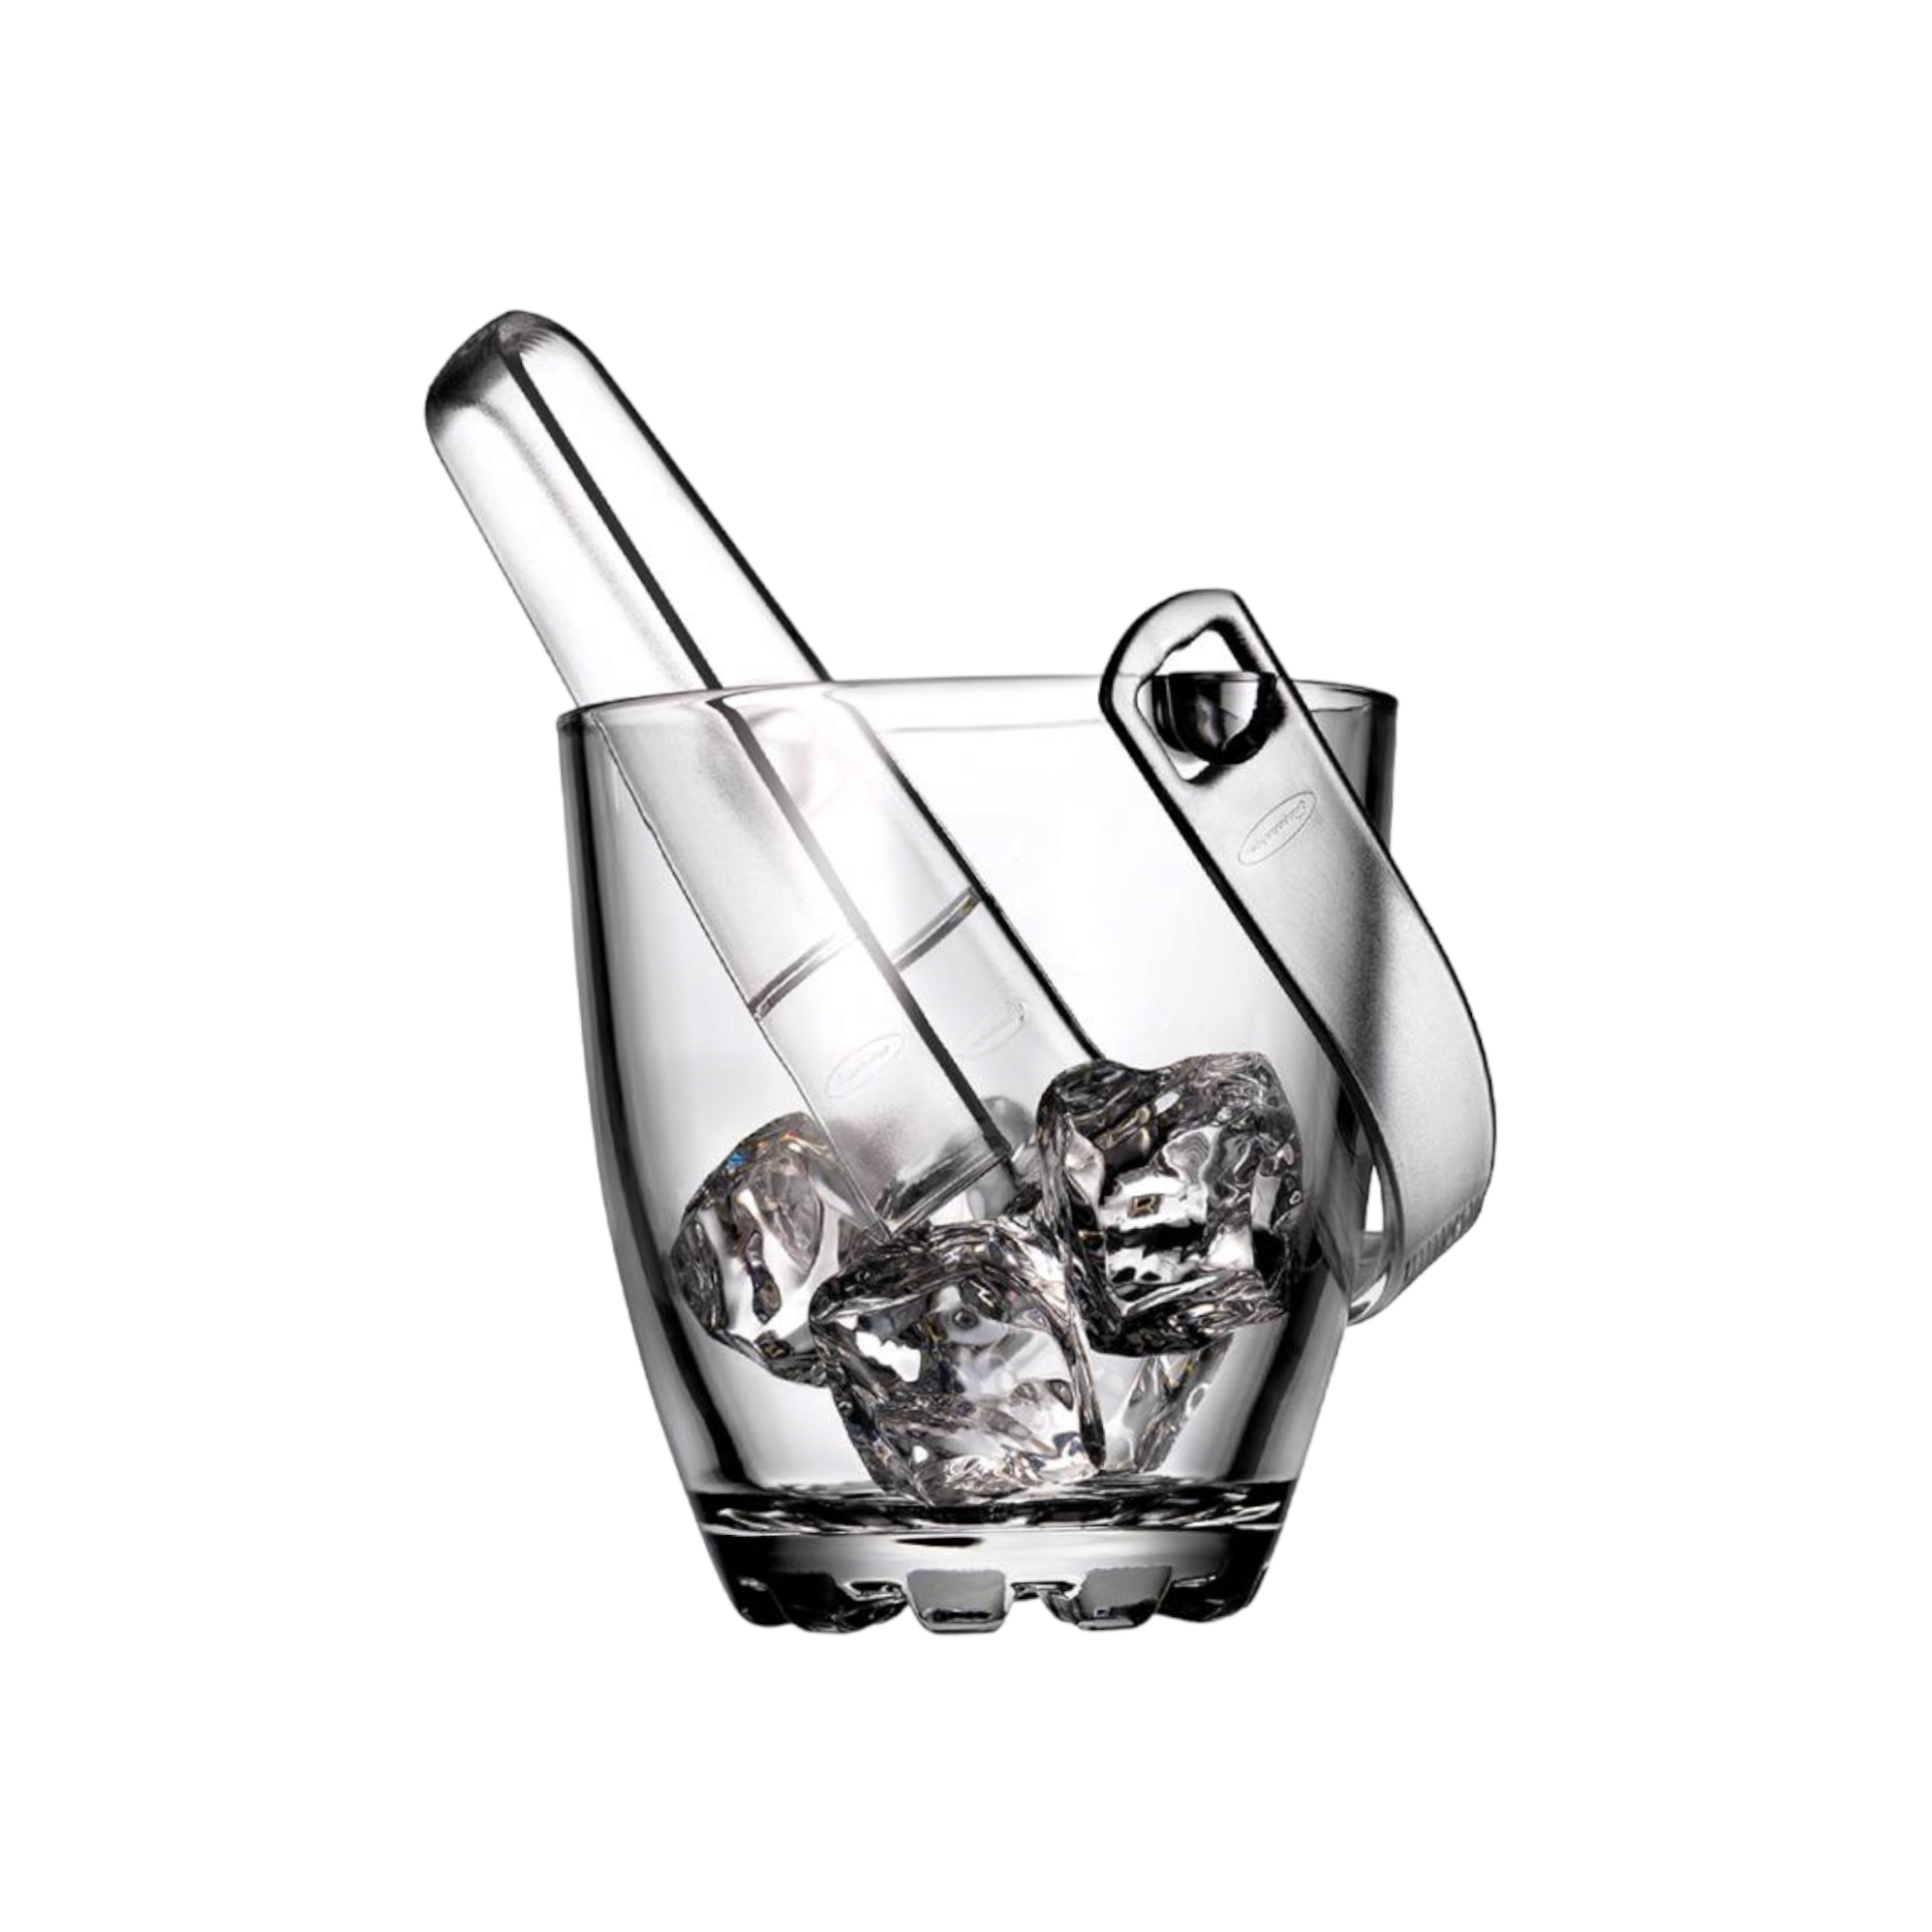 Pasabahce Sylvana Ice Bucket 12x12.5cm Glass 23172